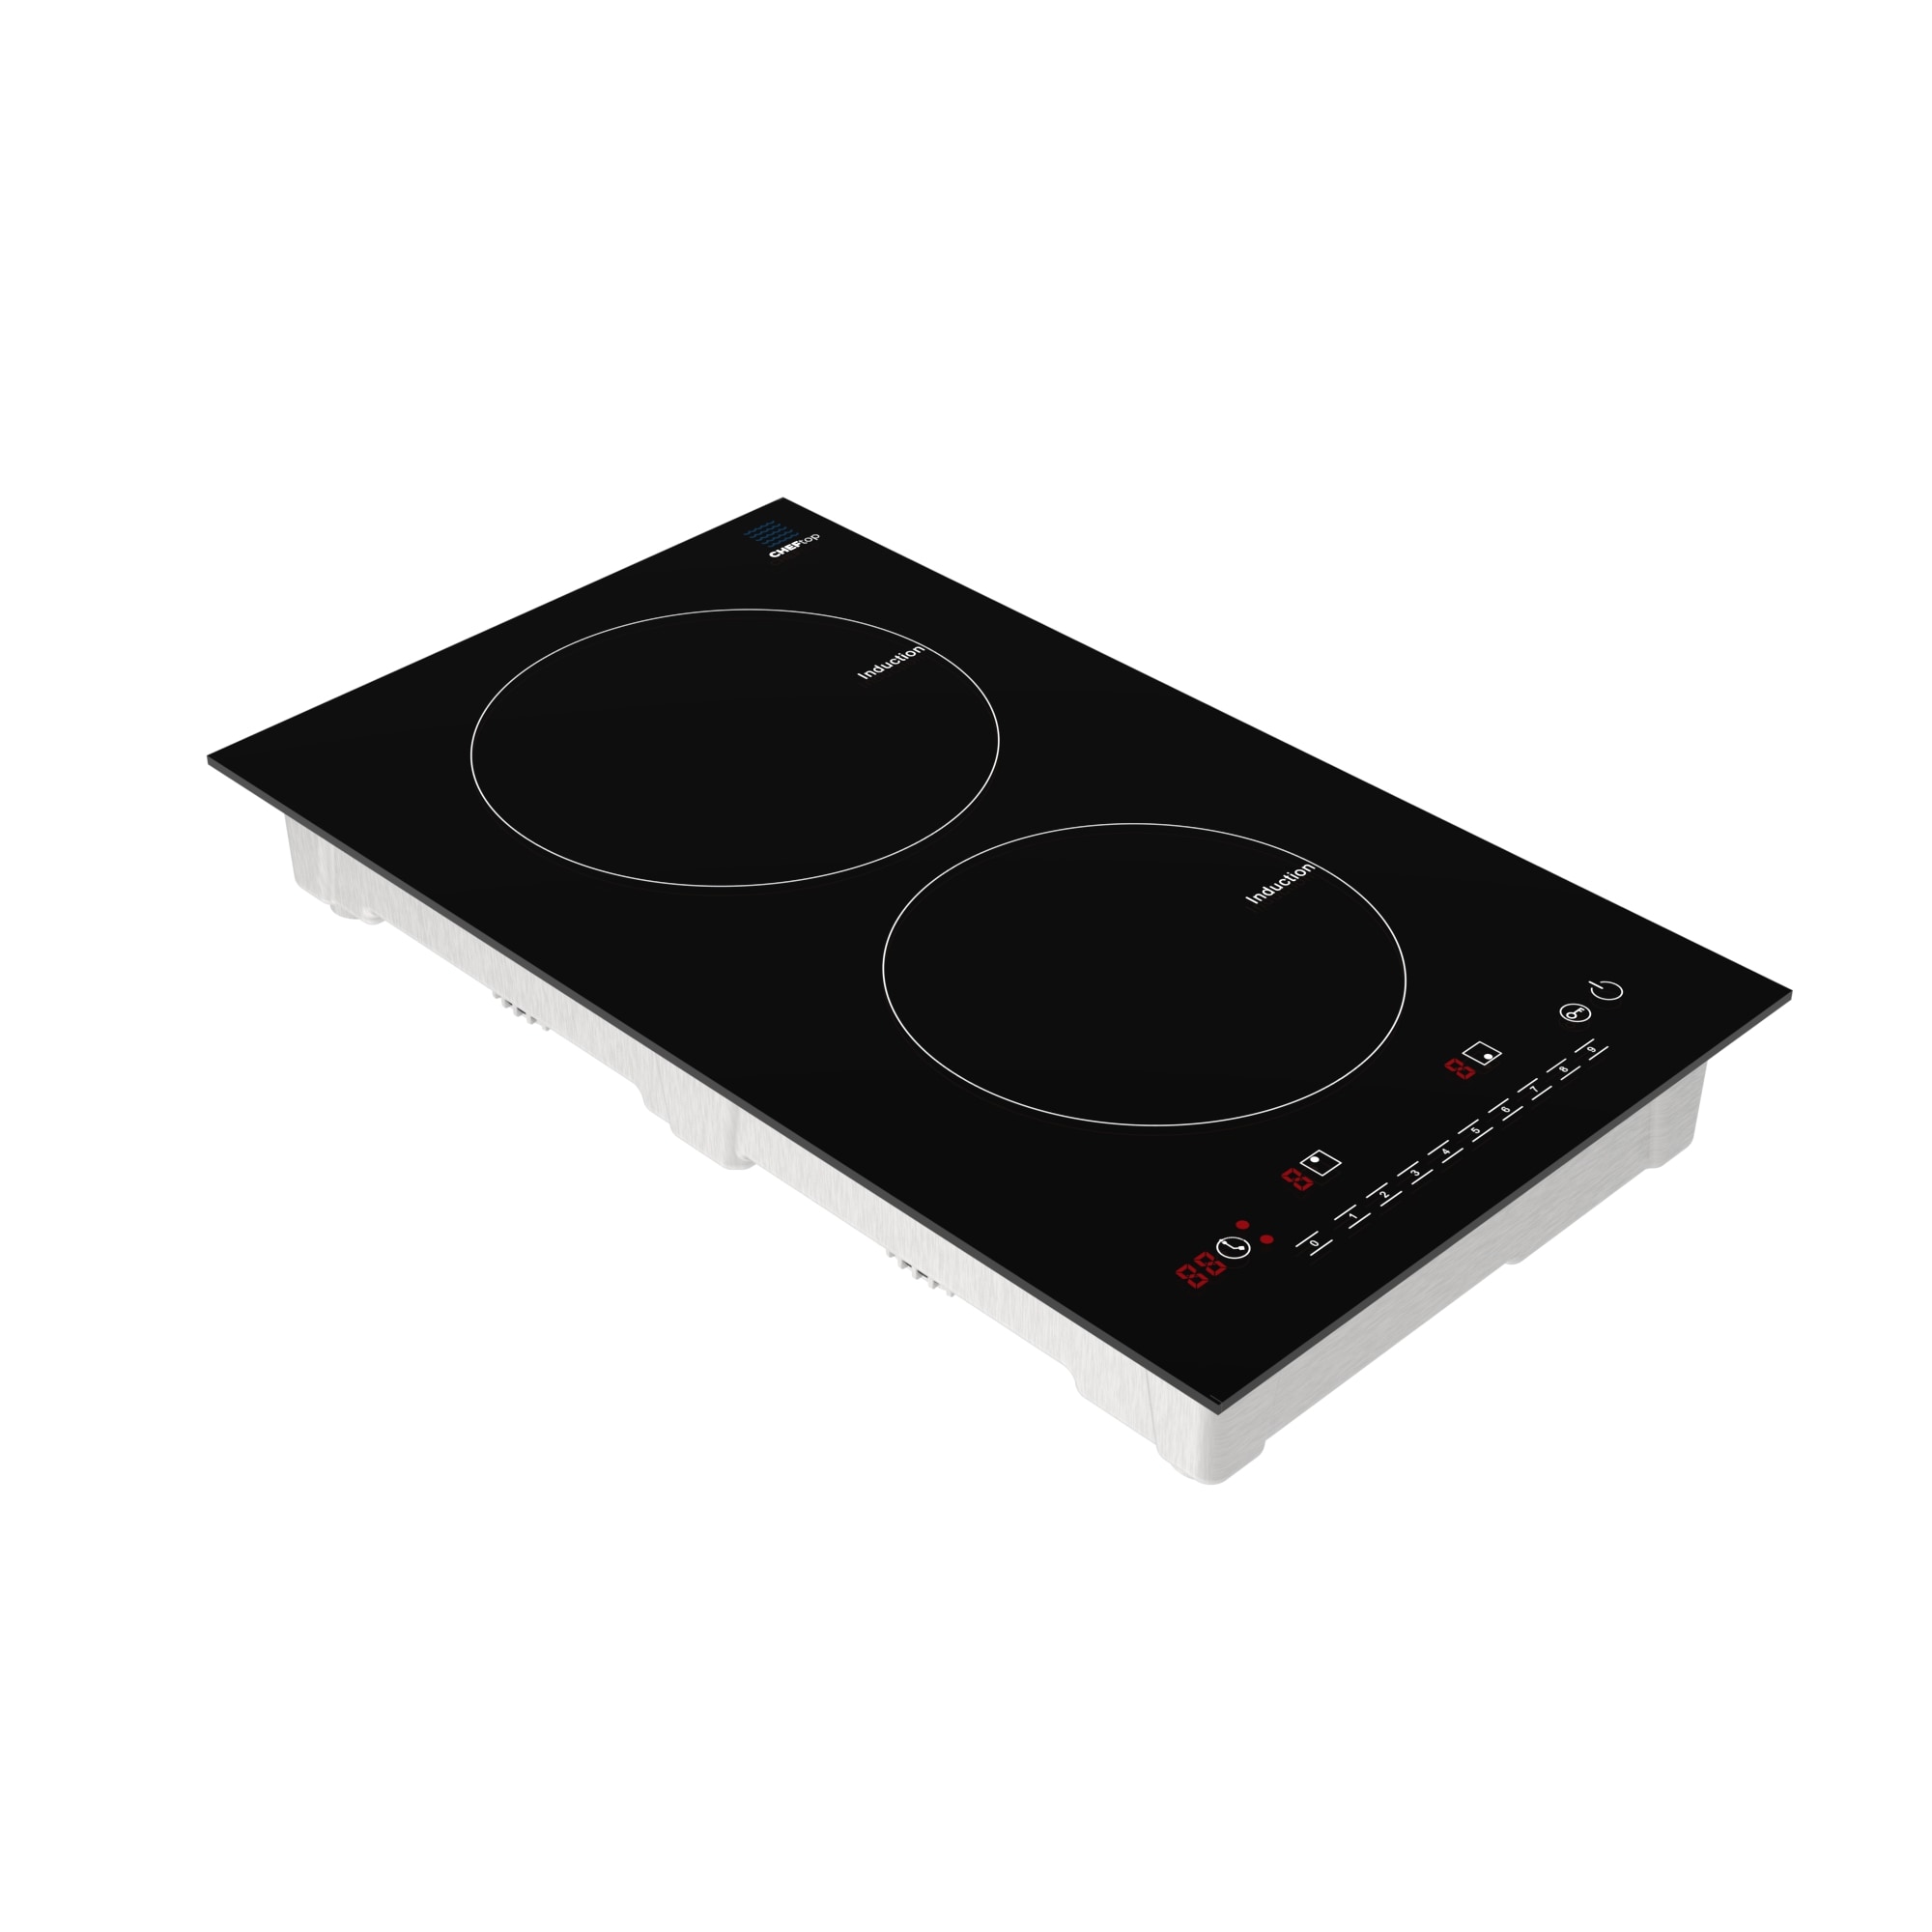 CHEFTop - Single Burner Induction Cooktop  Induction cooktop, Single  burner, Cooktop